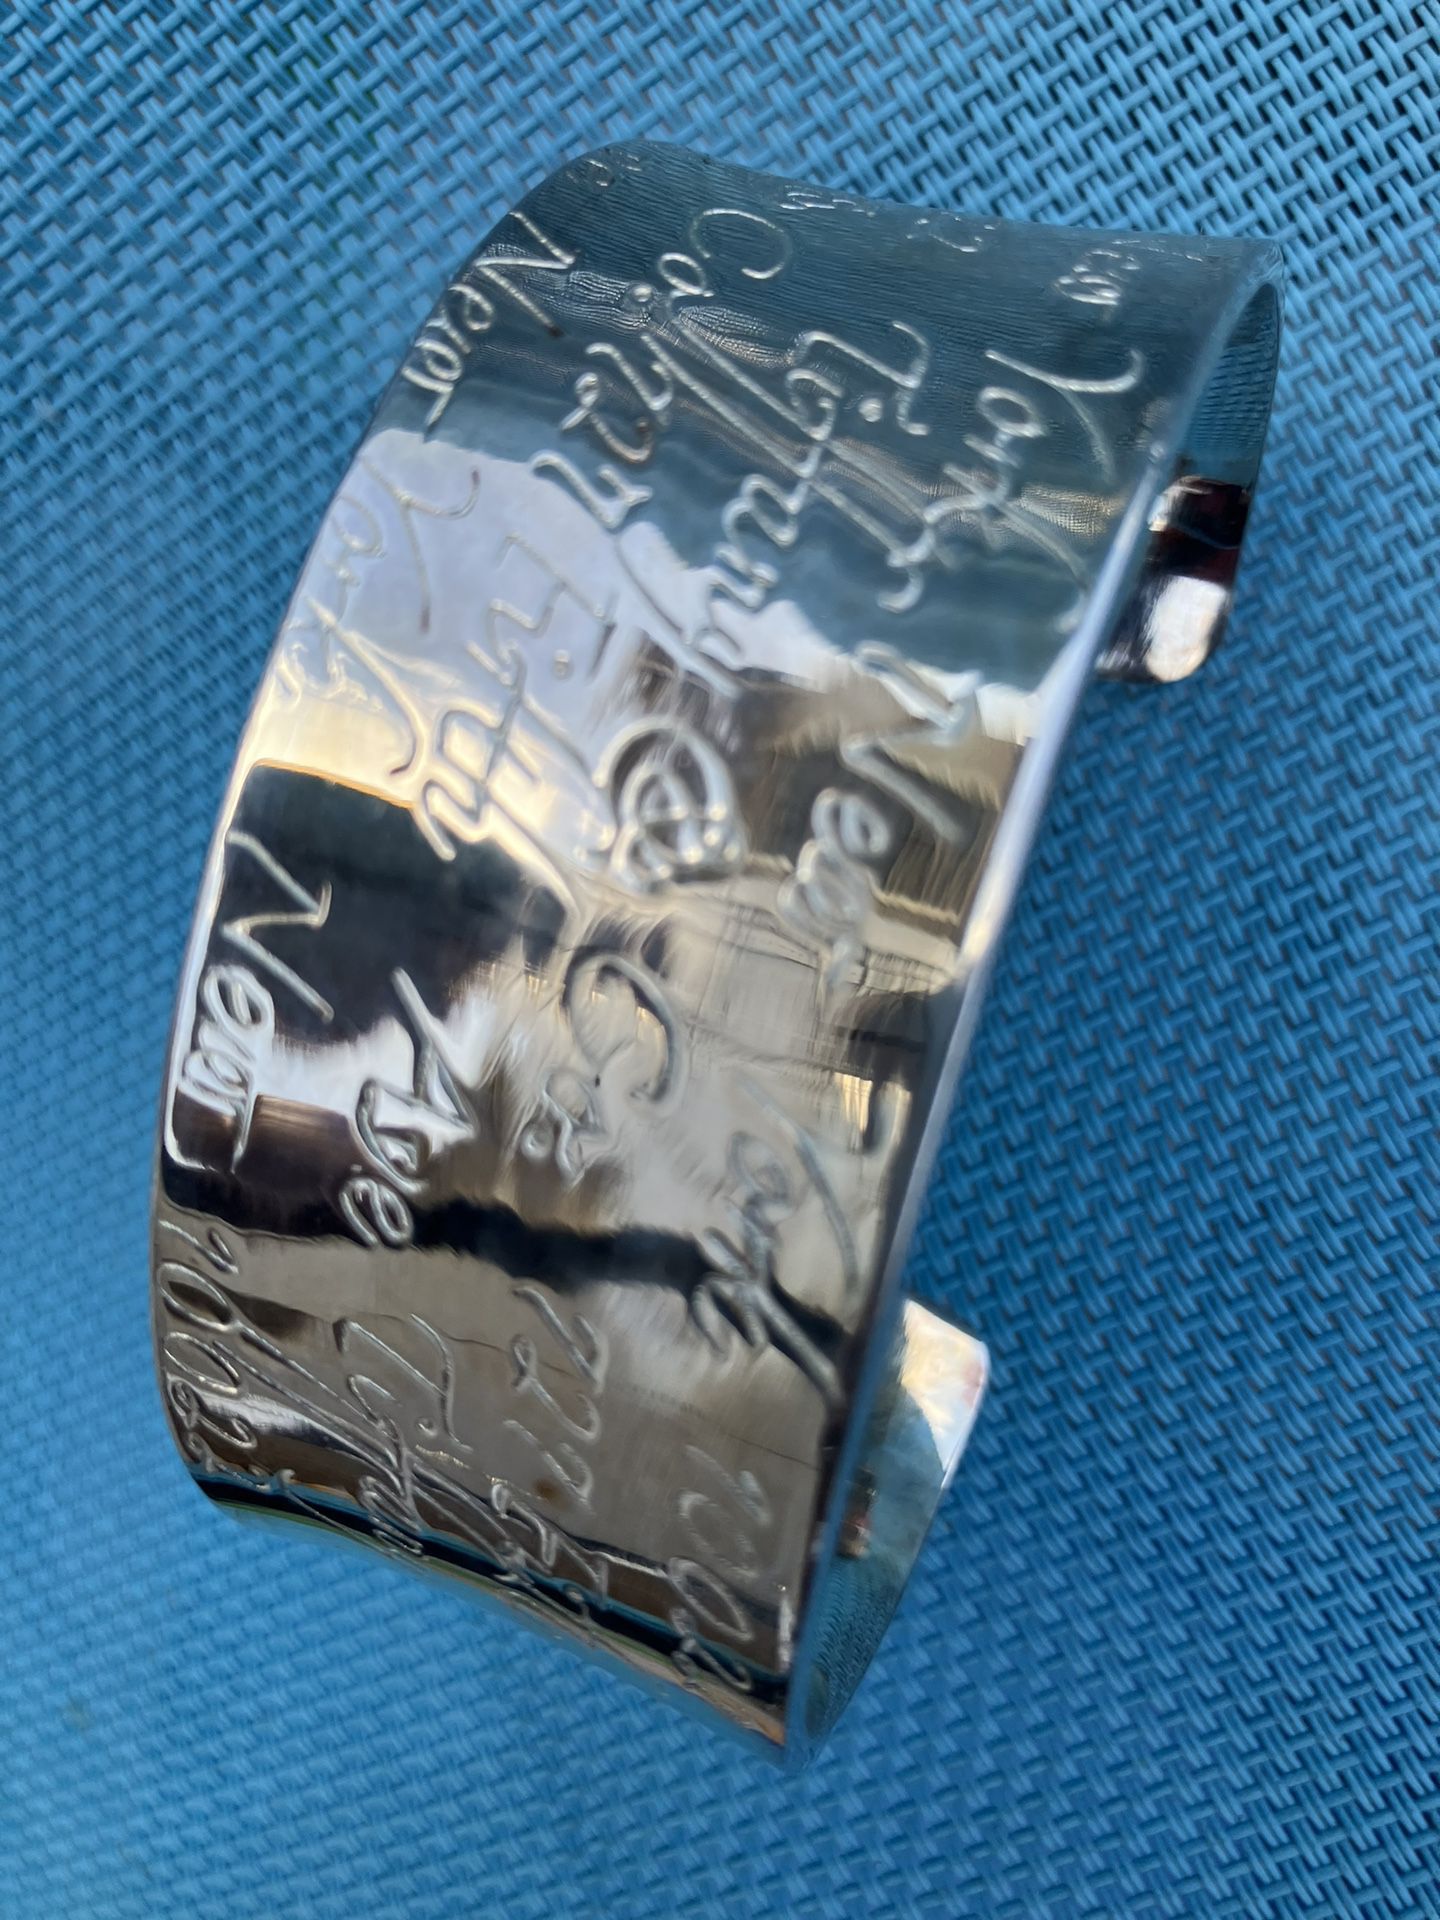 New Very Heavy Sterling Silver Tiffany & CO Cuff Bracelet.  Signed Inside Cufff Bracelet:  205 TIFFANY & CO 925.